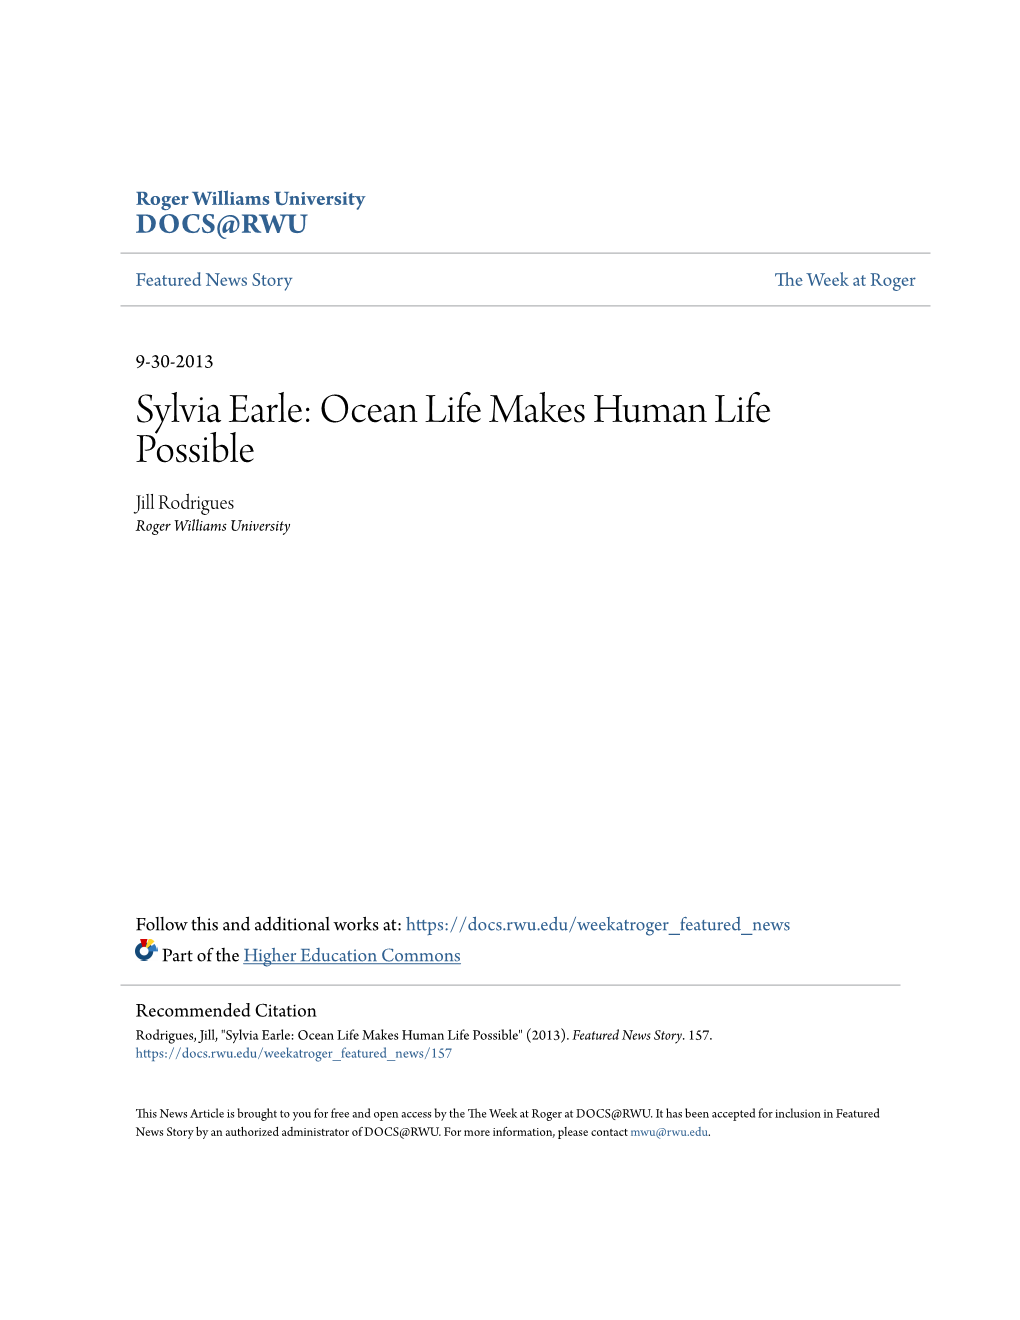 Sylvia Earle: Ocean Life Makes Human Life Possible Jill Rodrigues Roger Williams University